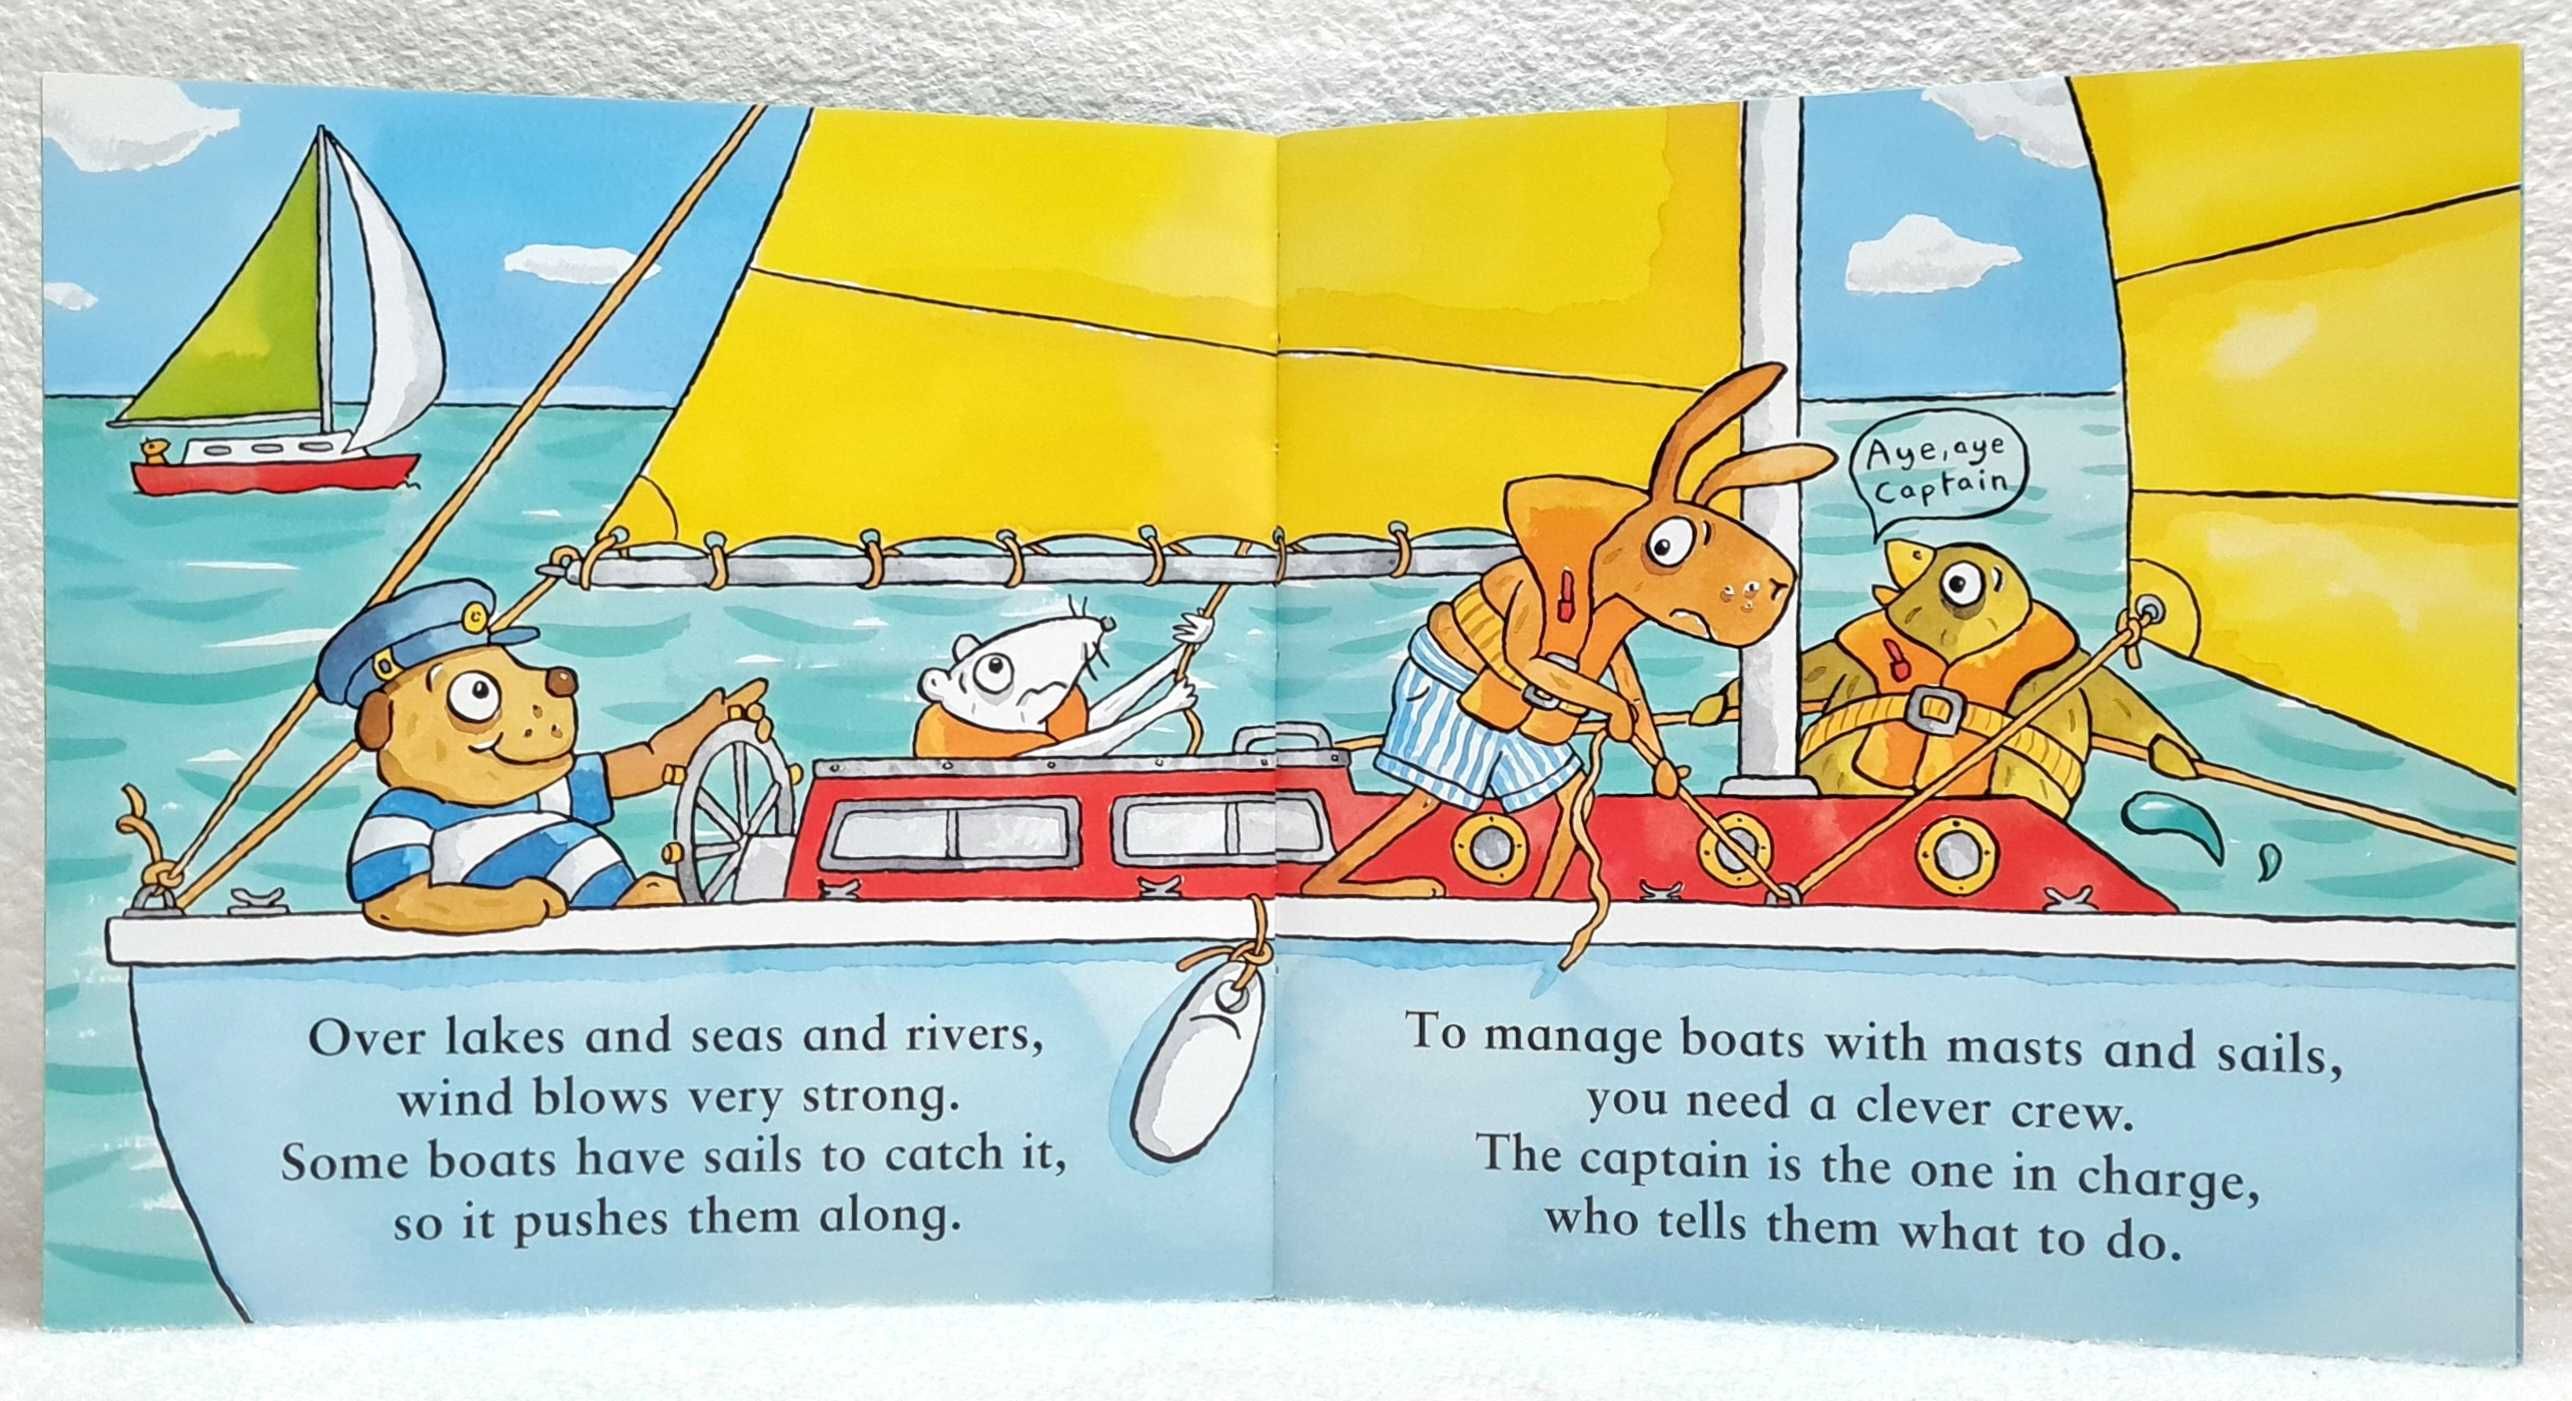 Brilliant Boats Tony Mitton Ant Parker książka angielska dla dzieci